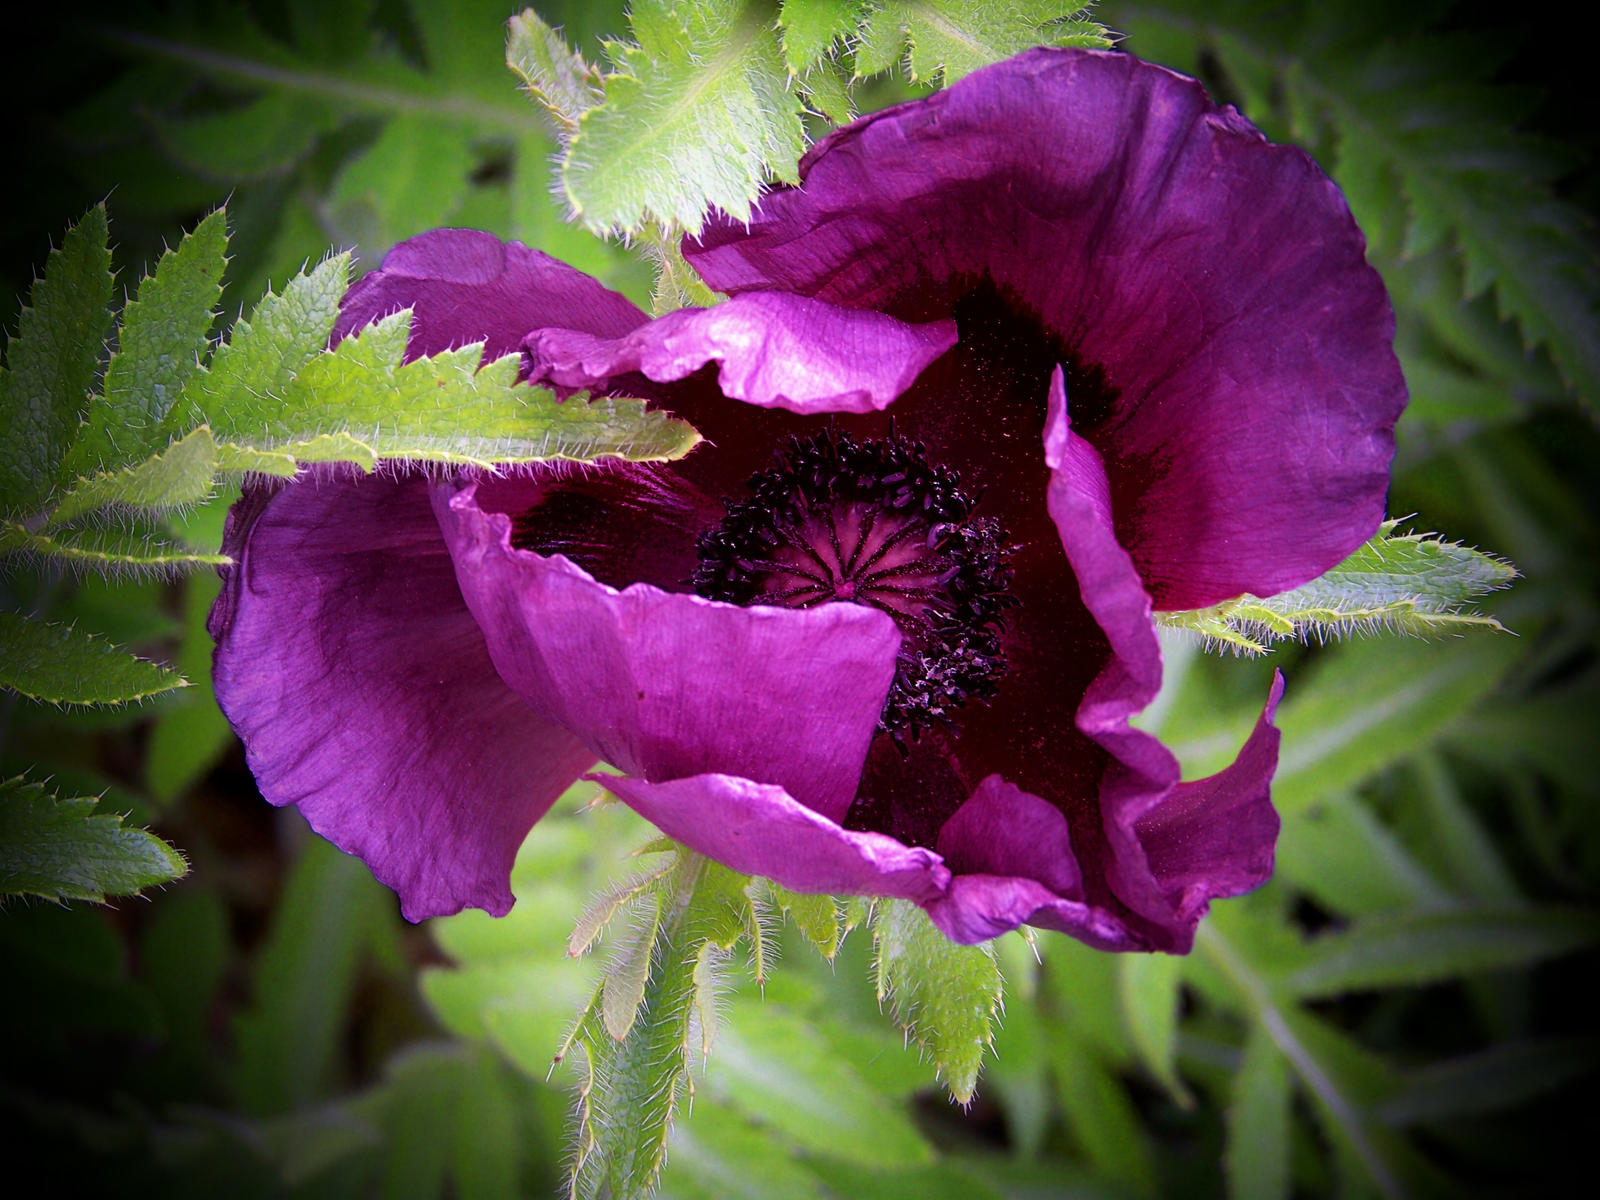 Purple Poppy II by MadGardens on DeviantArt